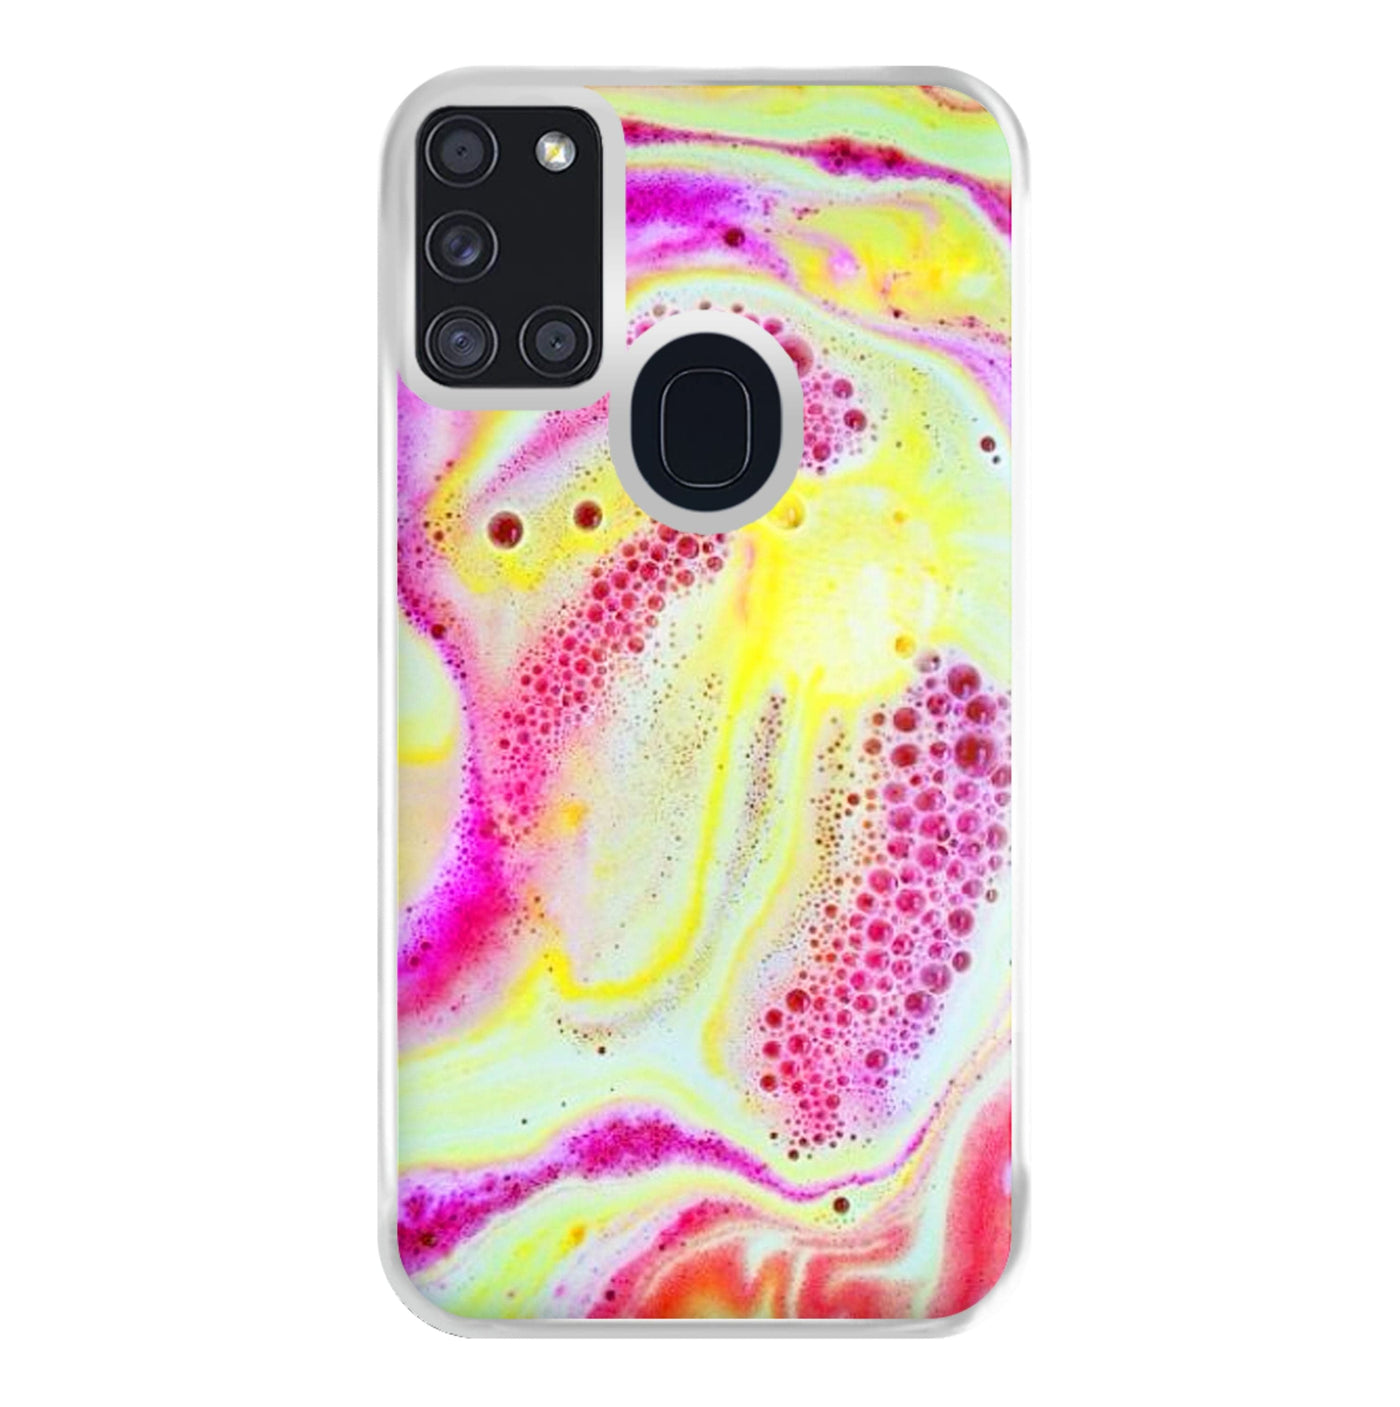 Super Colourful Bath Bomb Pattern Phone Case